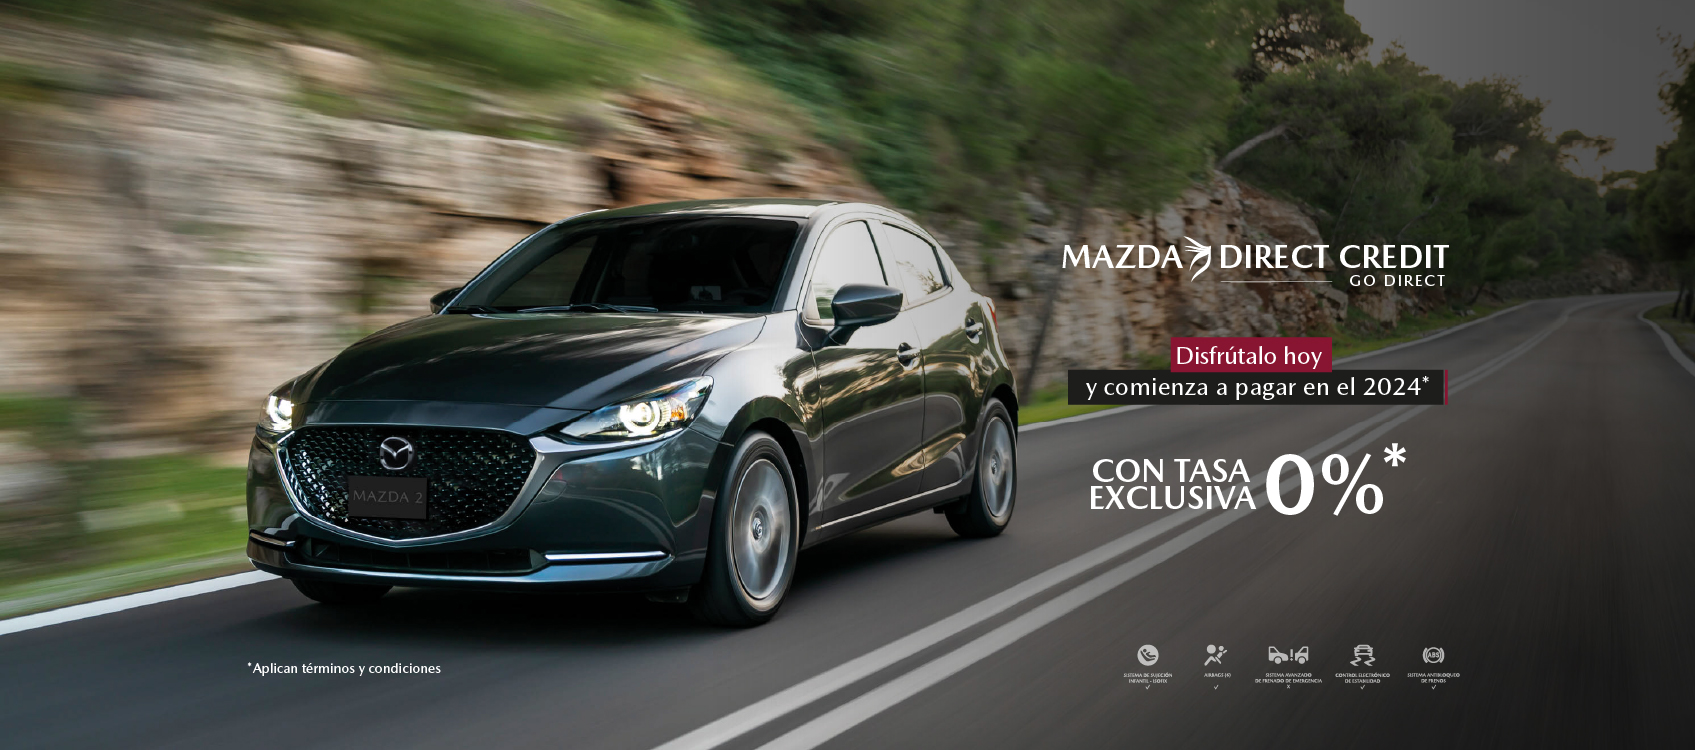 Mazda Direct Credit Tasa Exclusiva